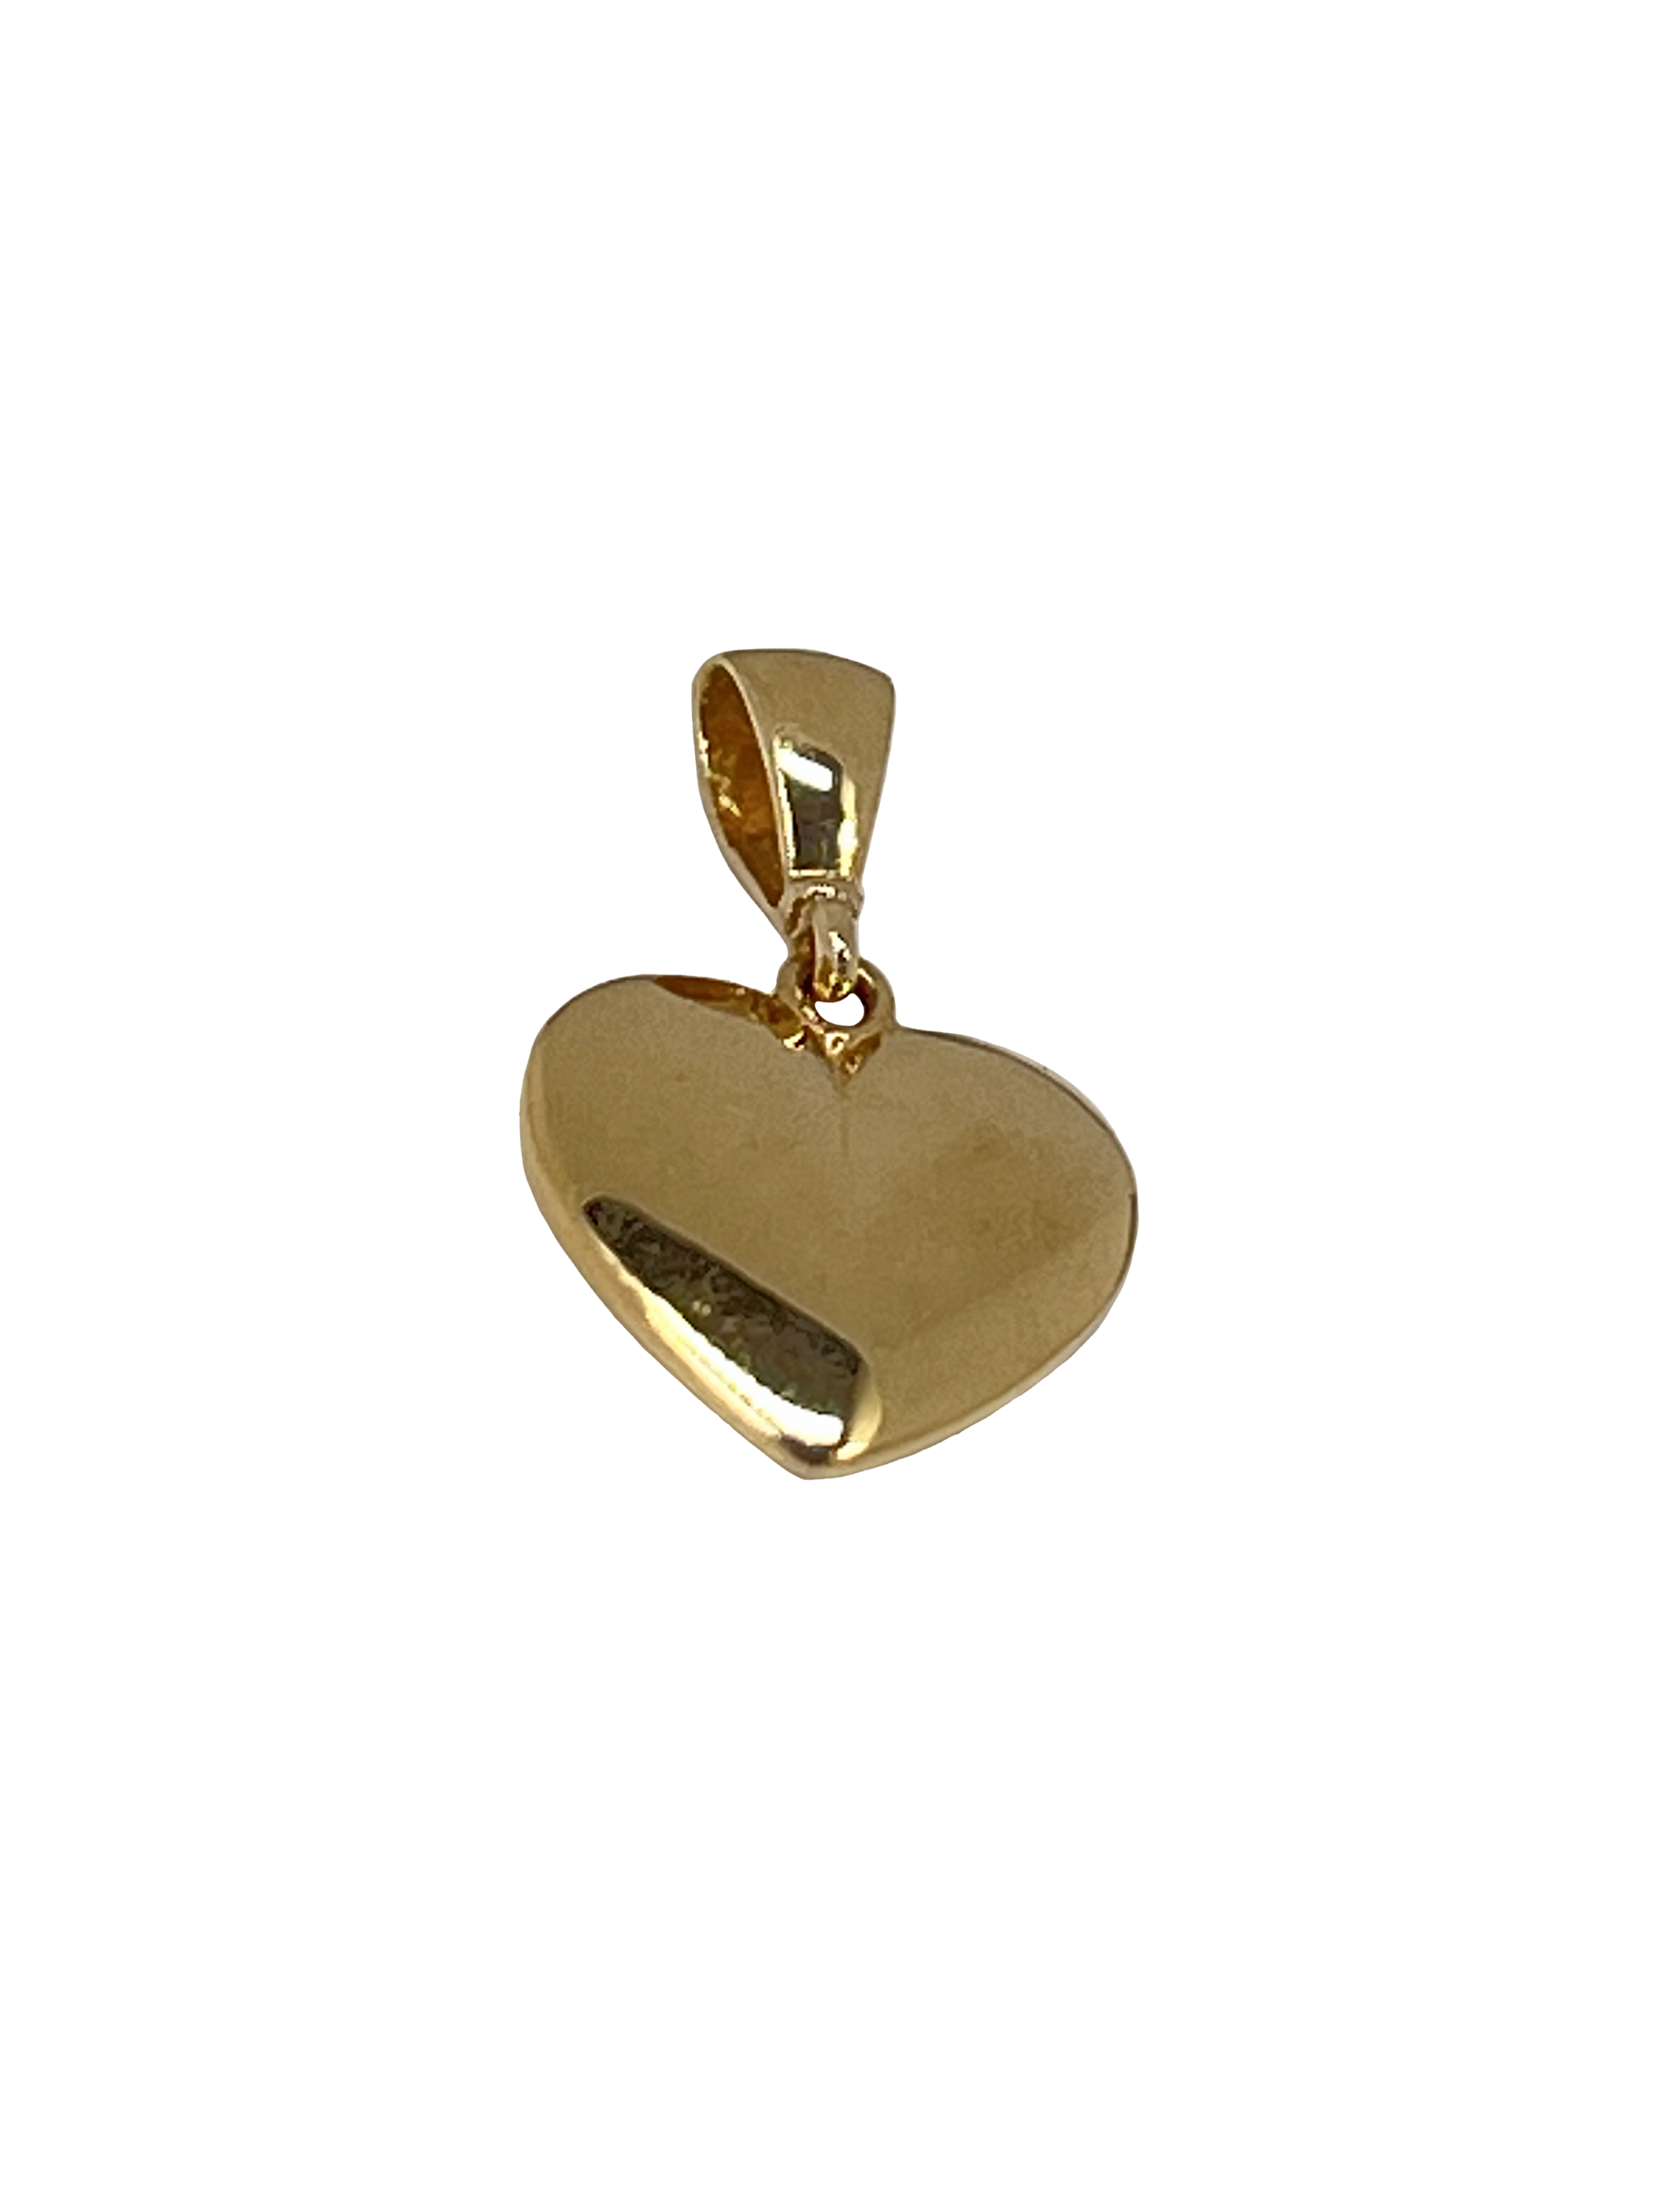 Golden heart pendant made of yellow gold